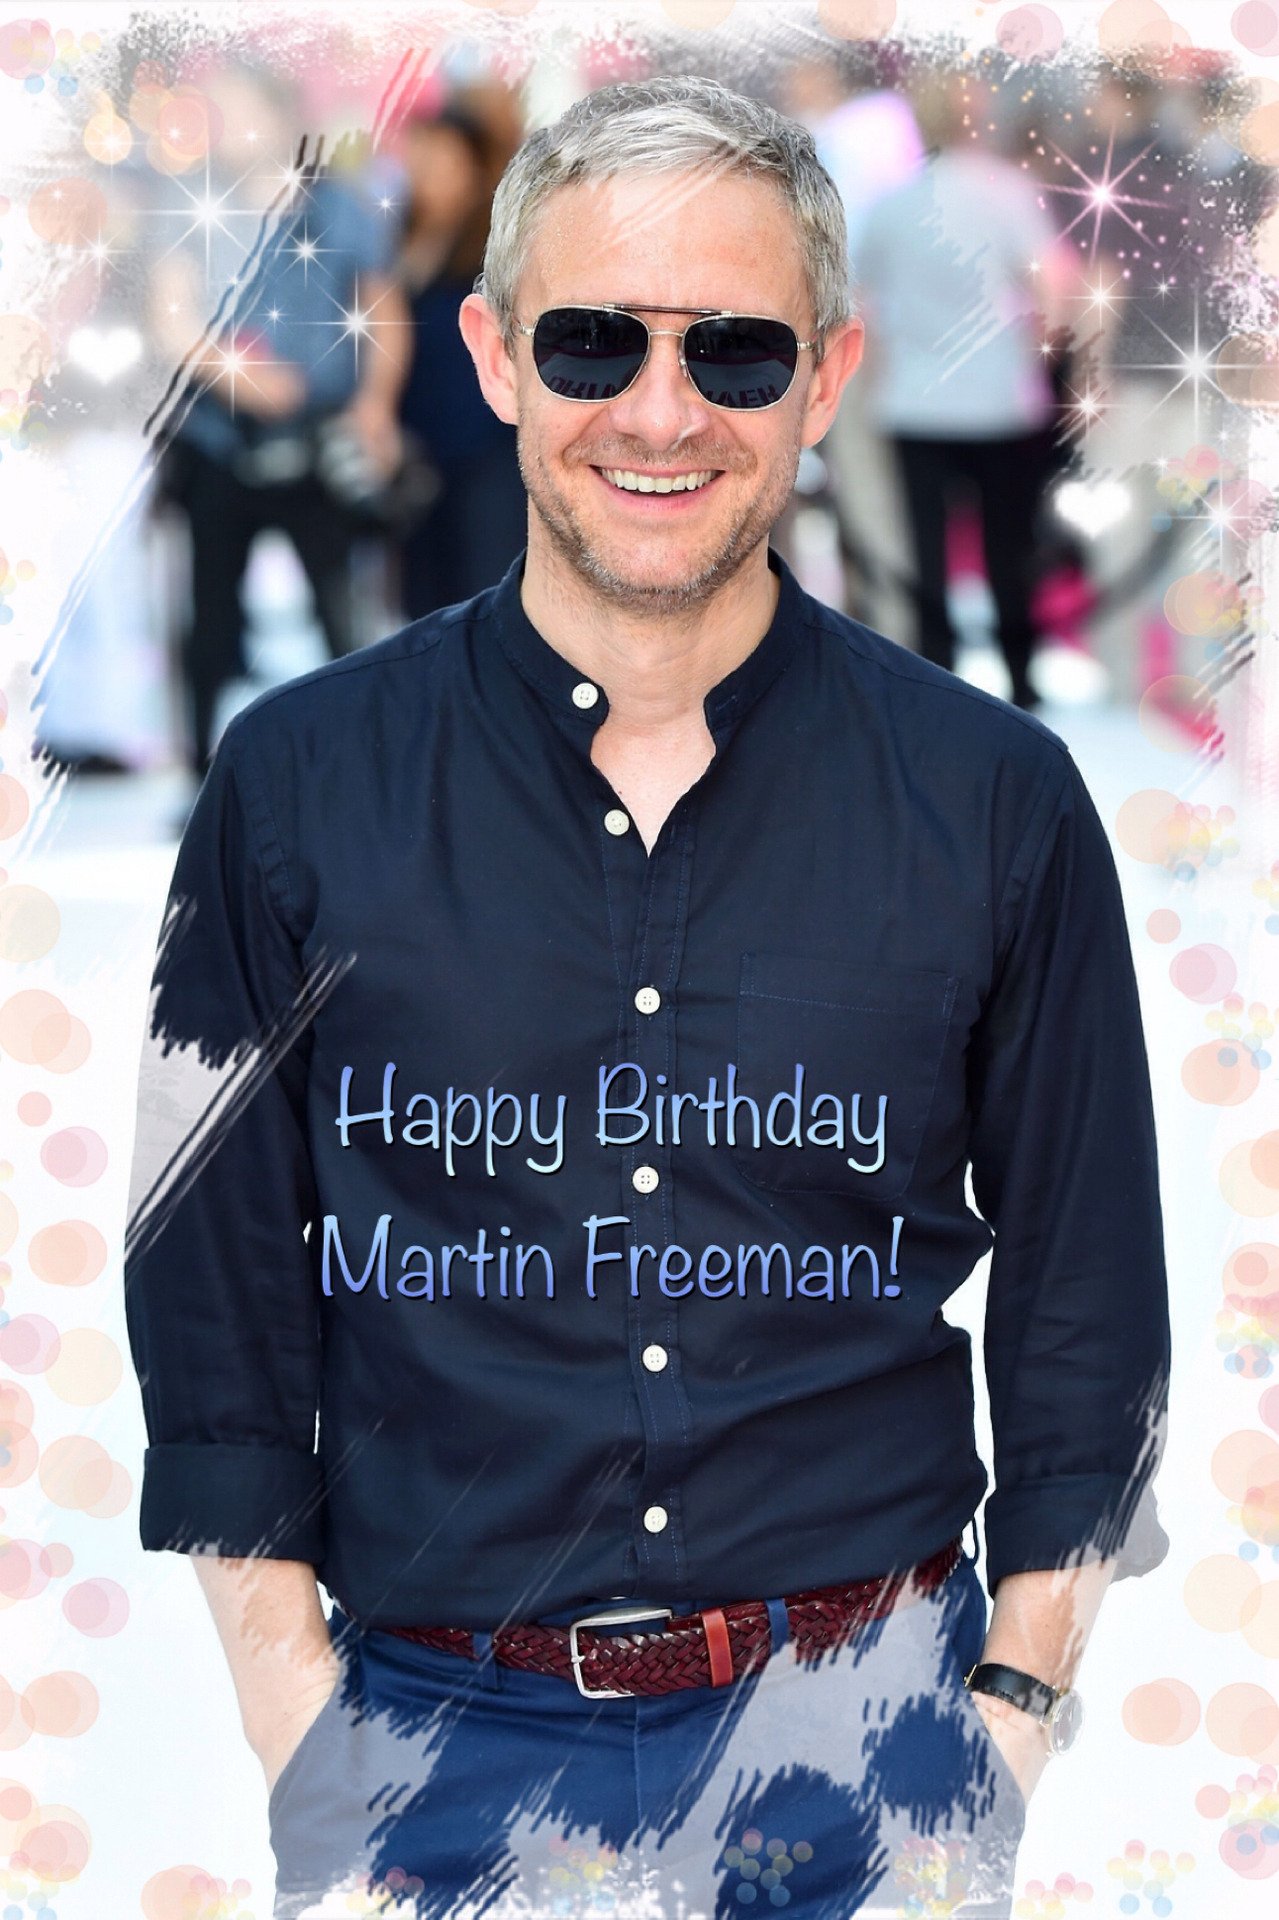 Happy birthday to the style icon that is Martin Freeman! 